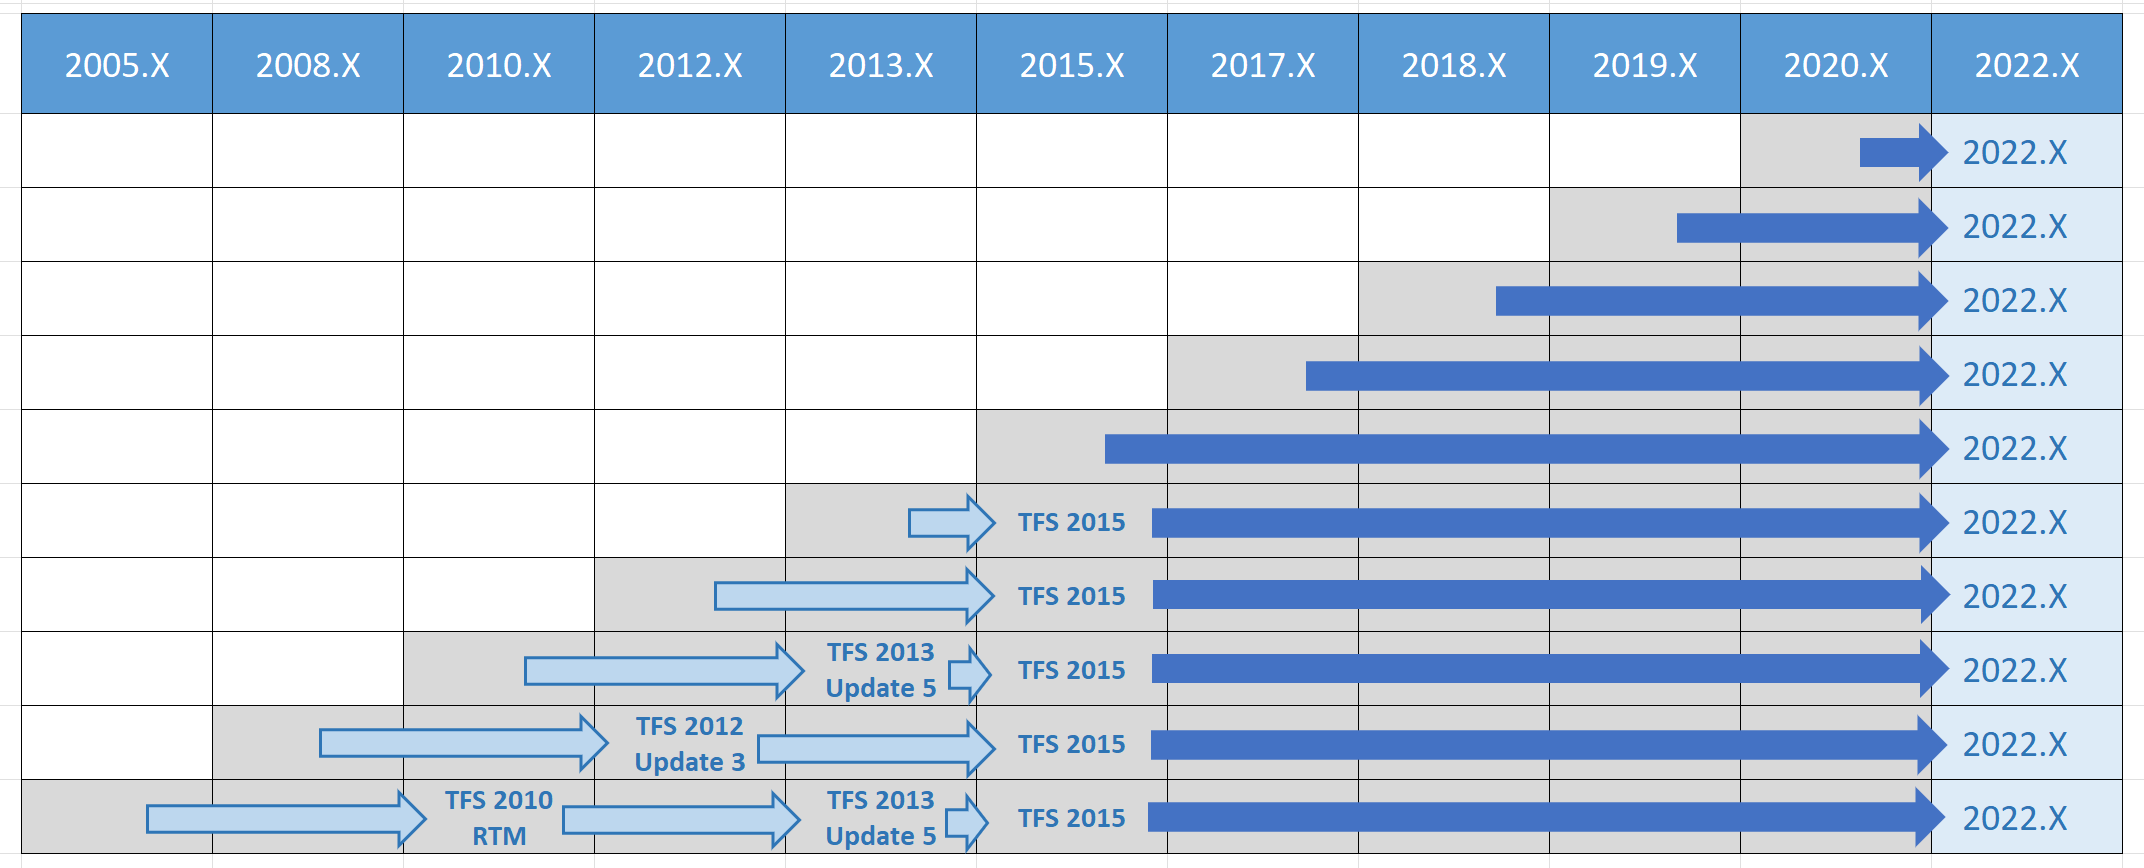 Azure DevOps 2022 Upgrade path matrix for all previous versions.